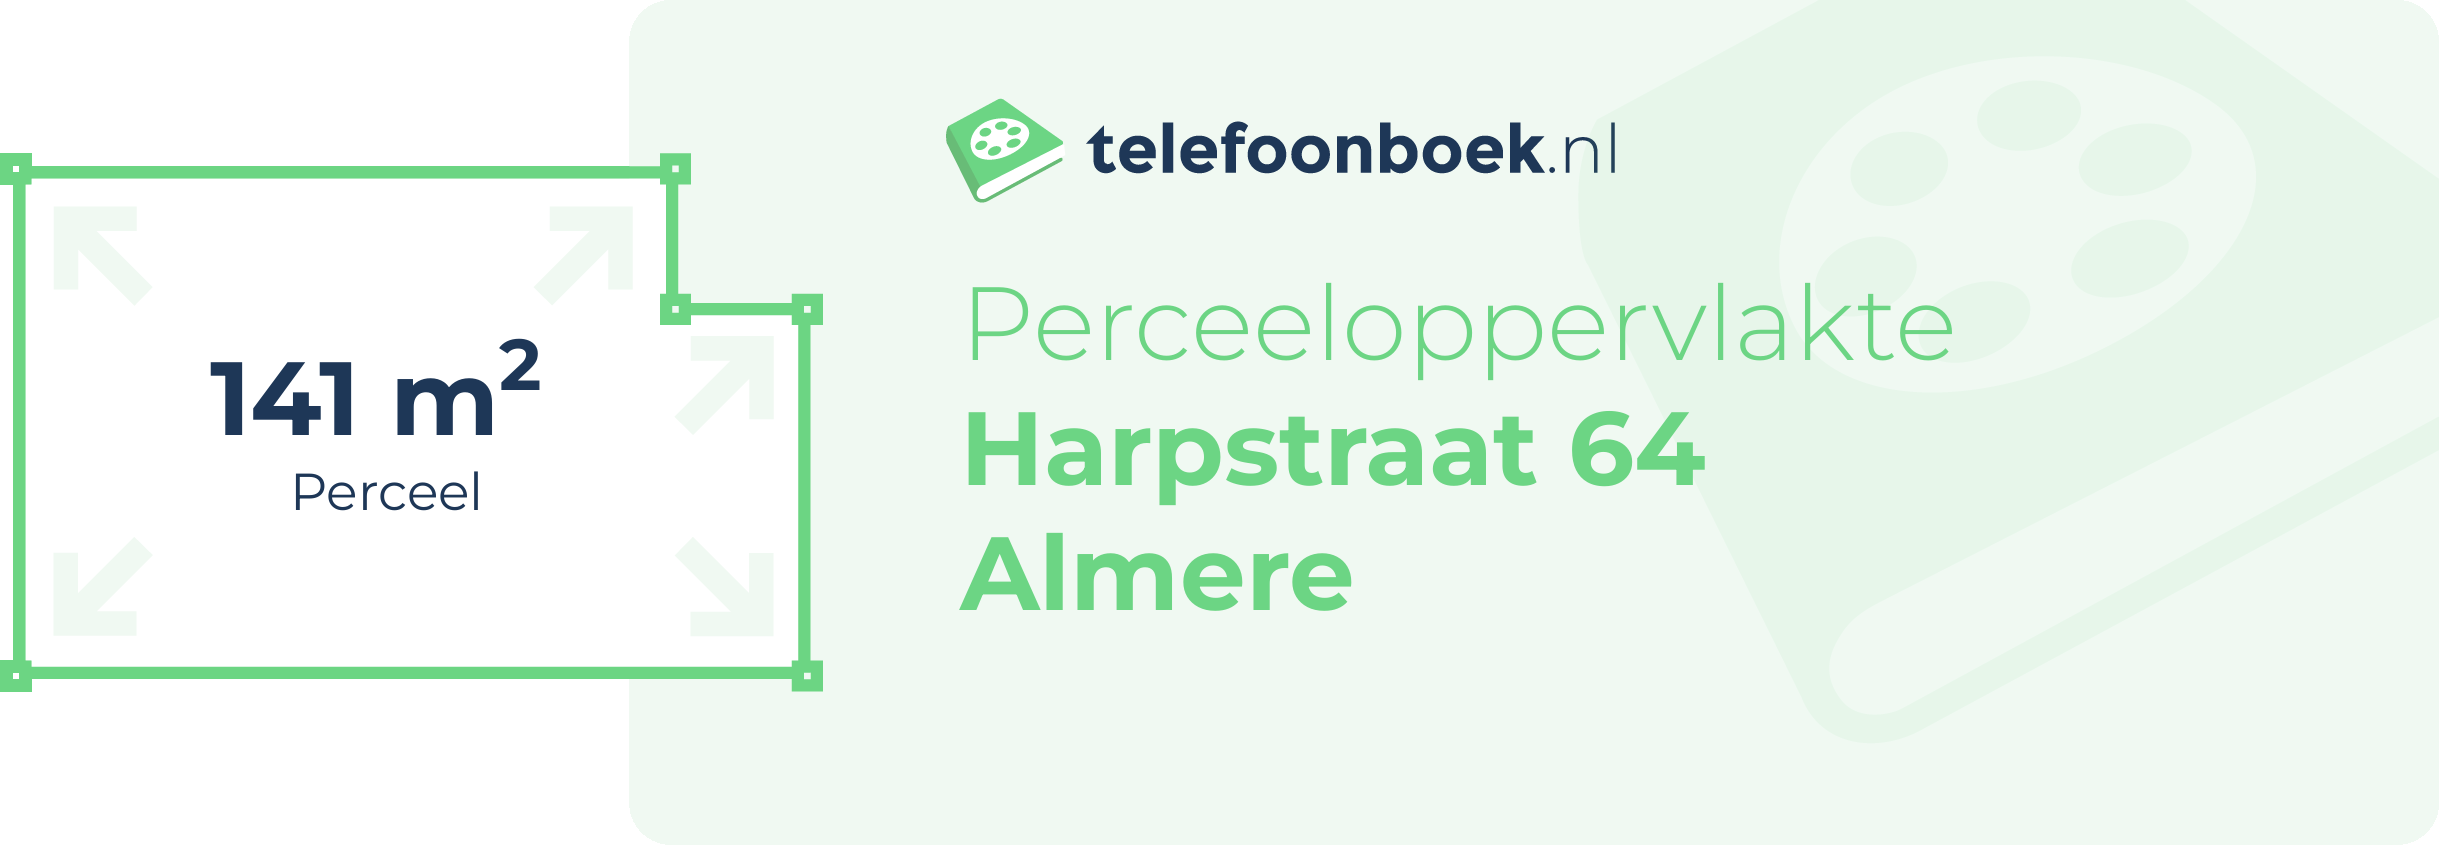 Perceeloppervlakte Harpstraat 64 Almere